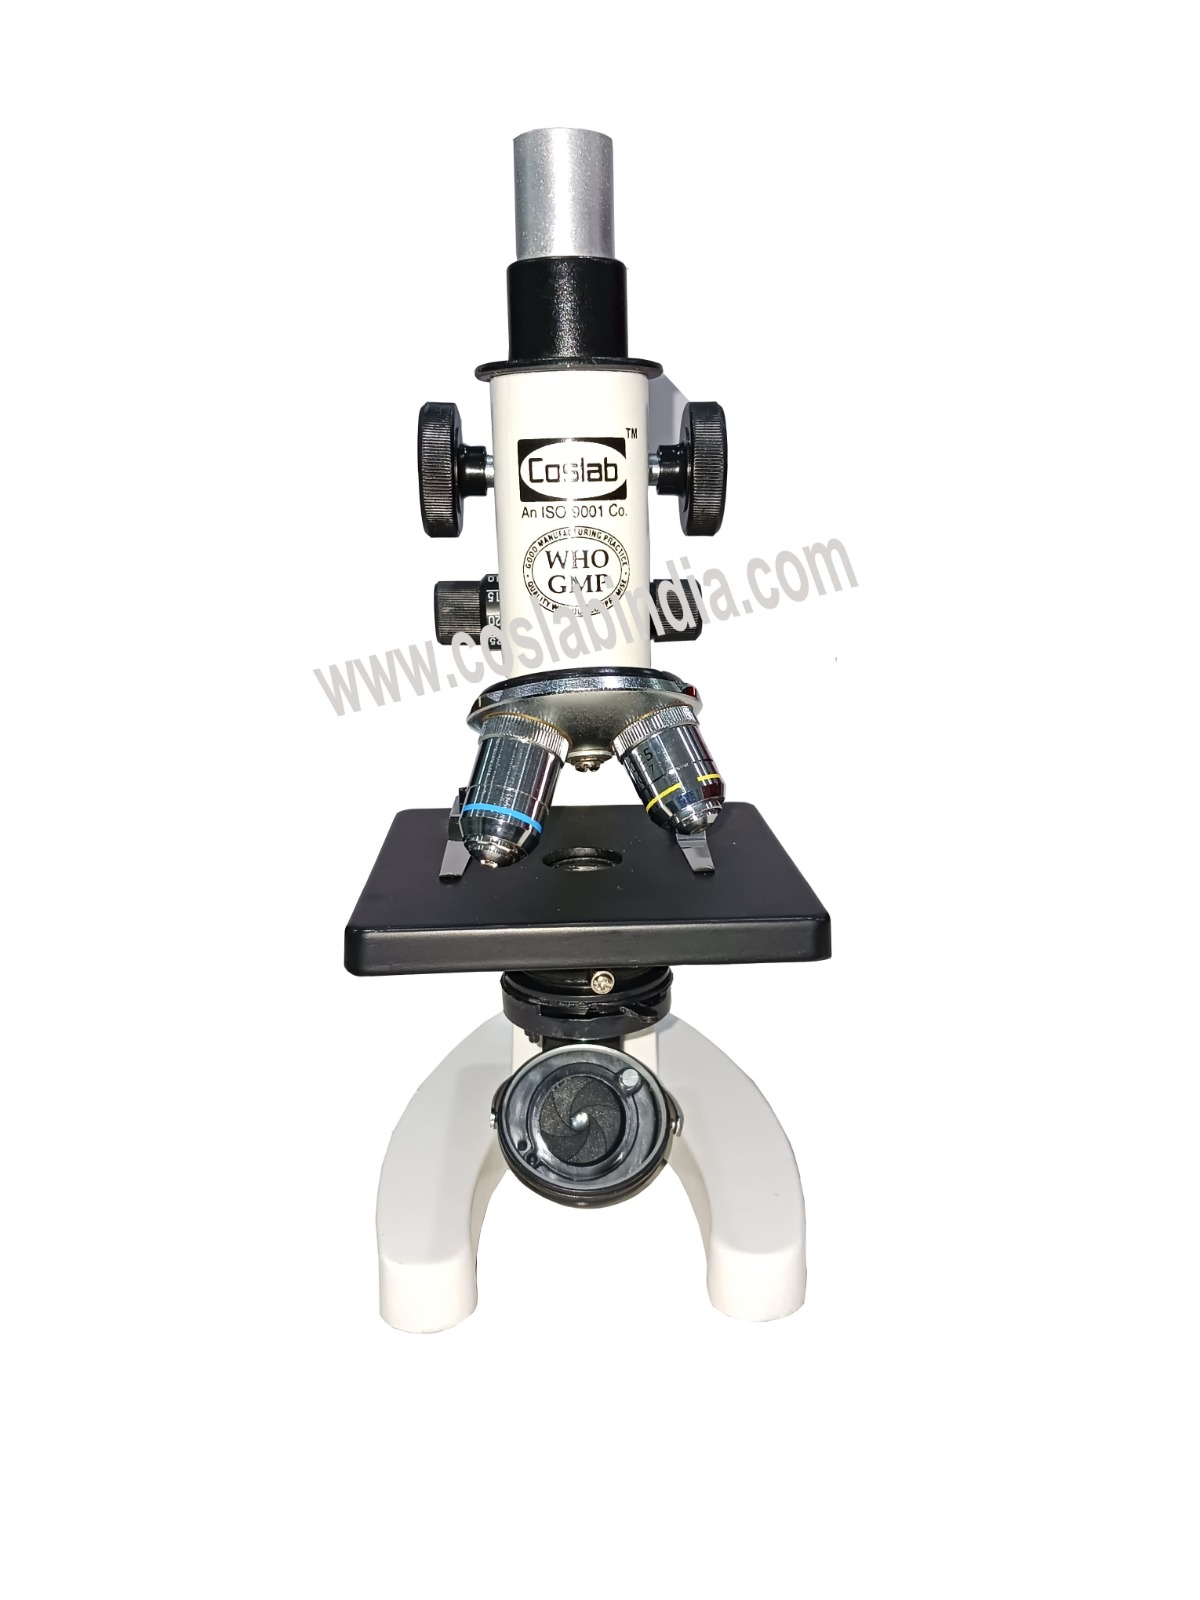 Student Microscope (Compound Microscope) - VN-5 / 10009-10012